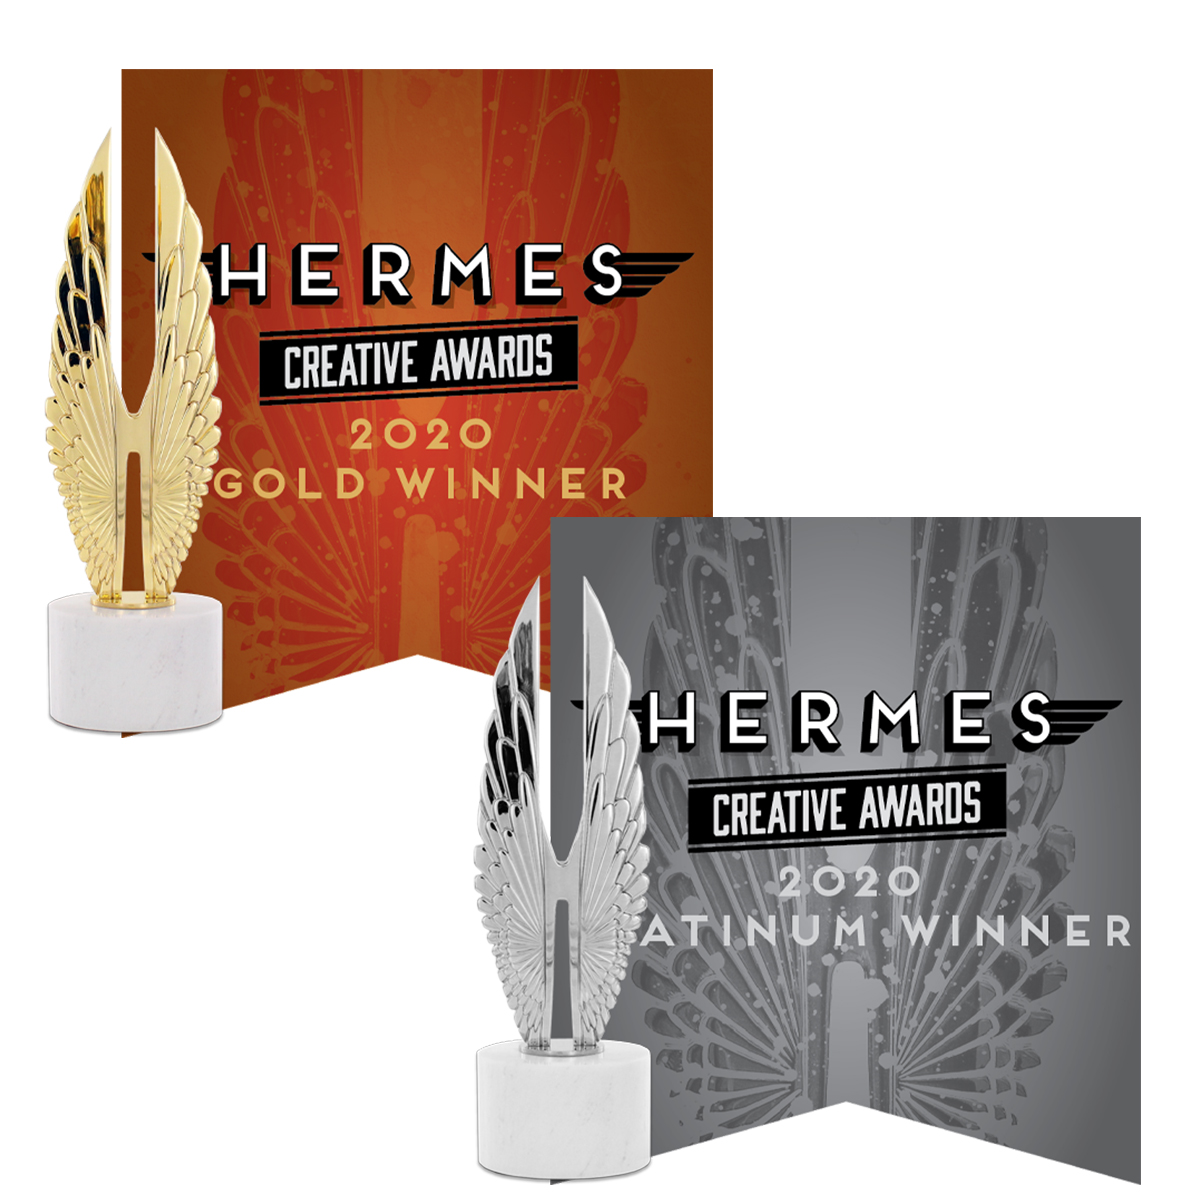 Visibly Connected Wins Platinum & Gold Hermes Creative Awards for Web Design